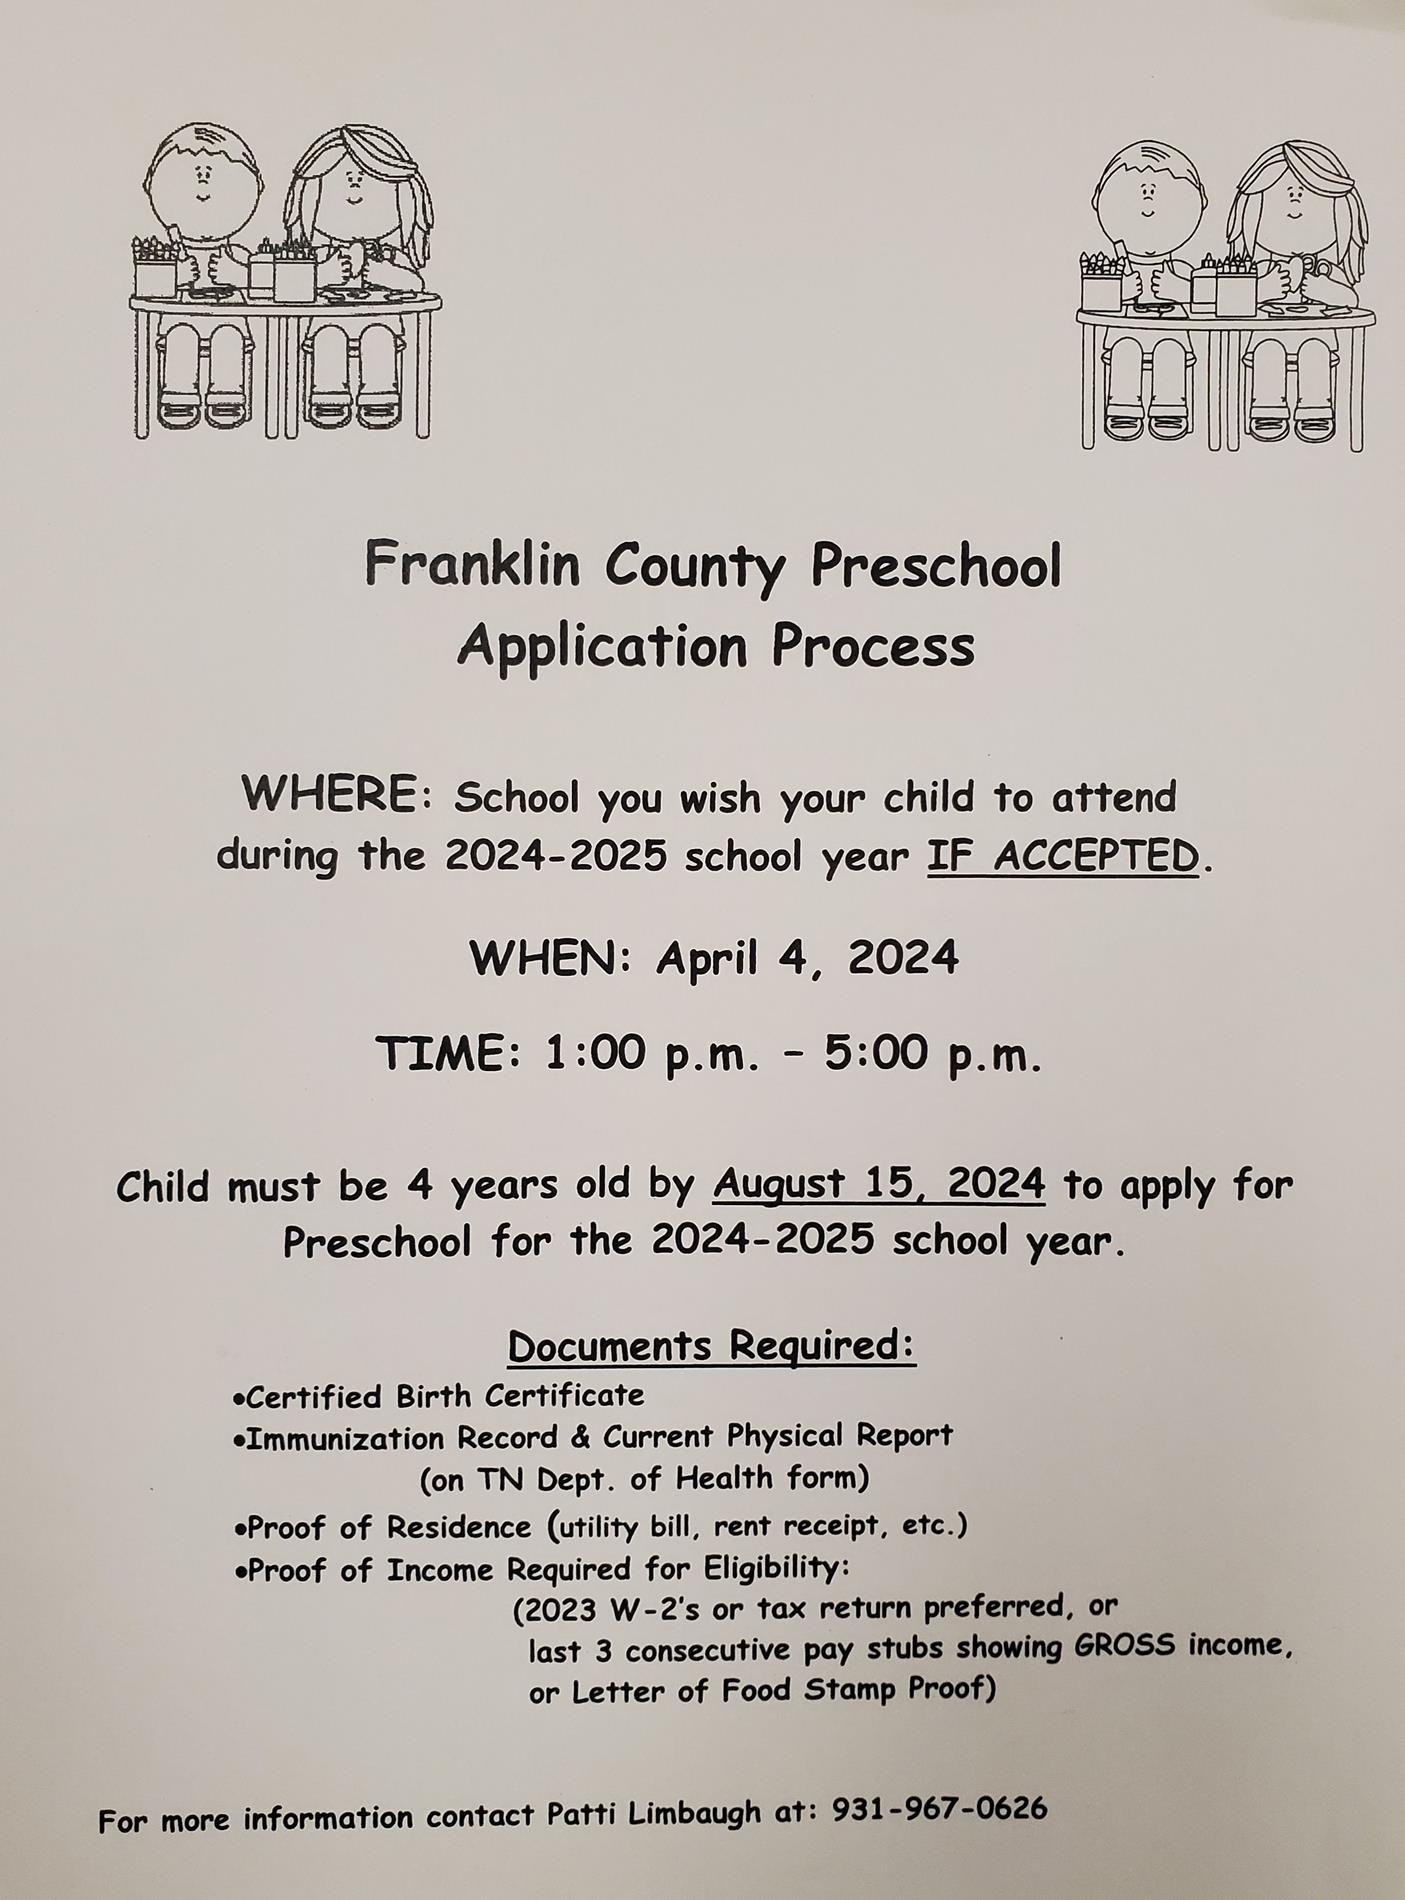 Preschool application processcan be found in document link below